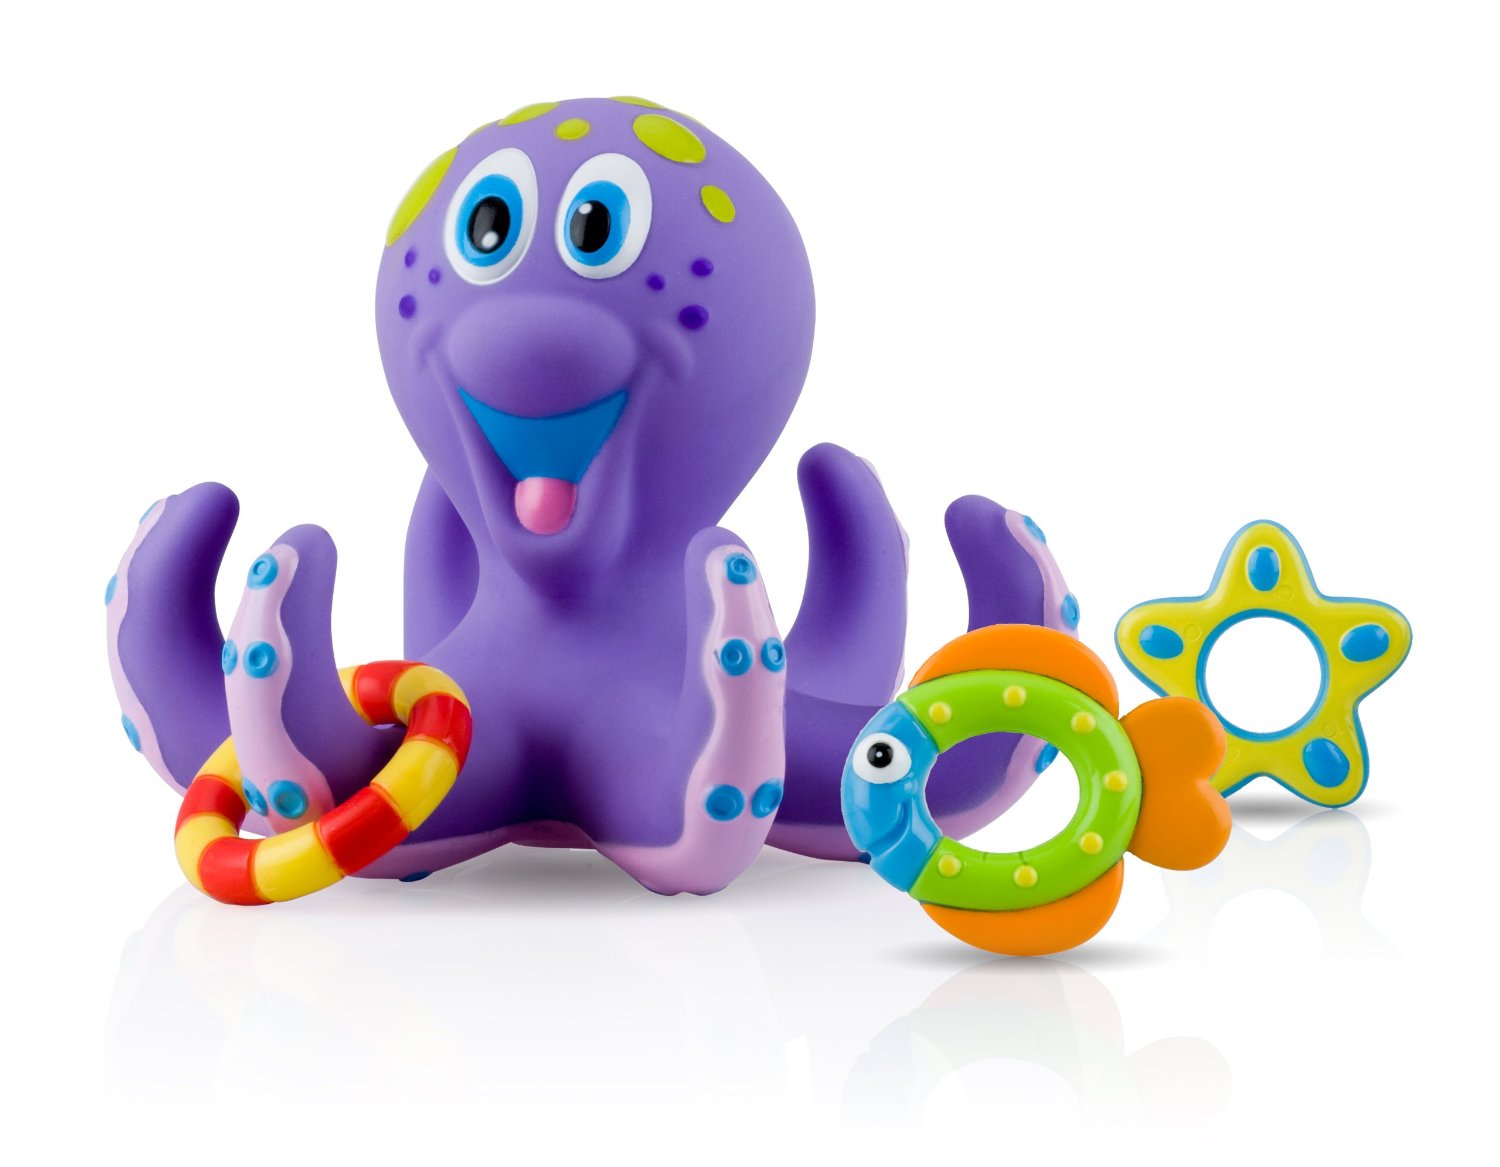 Amazon.com: Baby & Toddler Toys: Toys & Games: Balls, Electronic ...